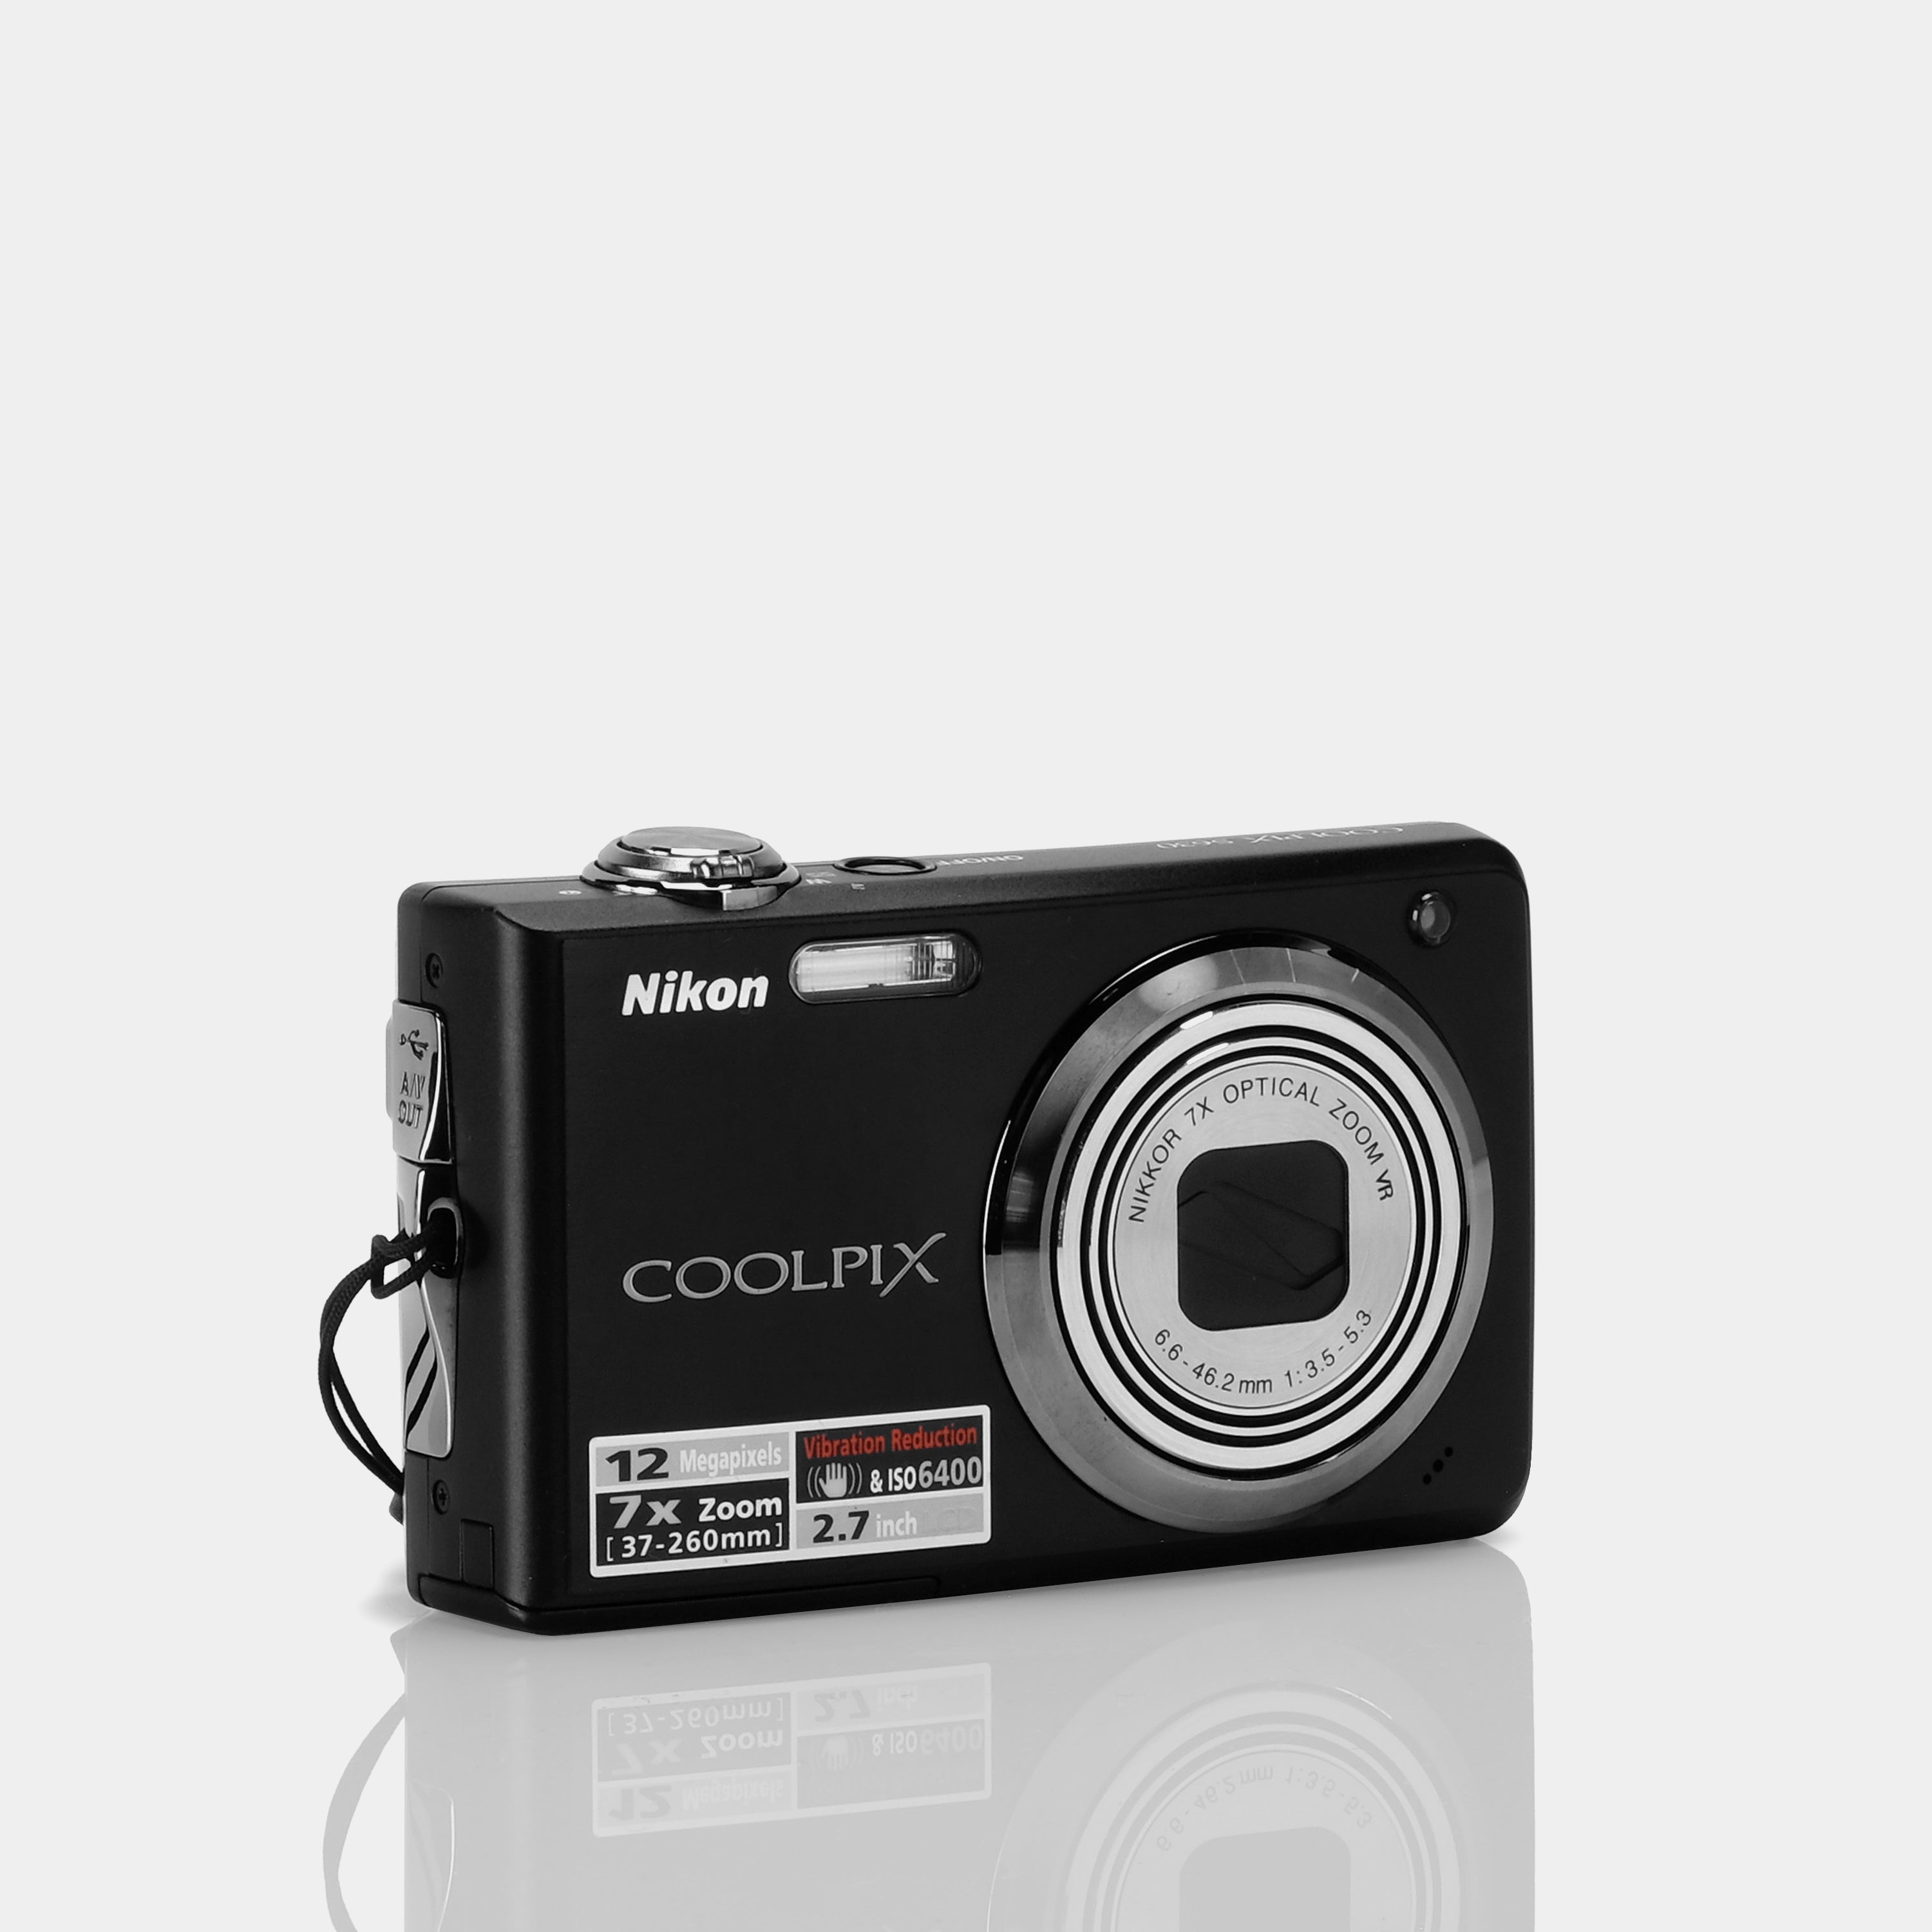 Nikon Coolpix S630 Point and Shoot Digital Camera